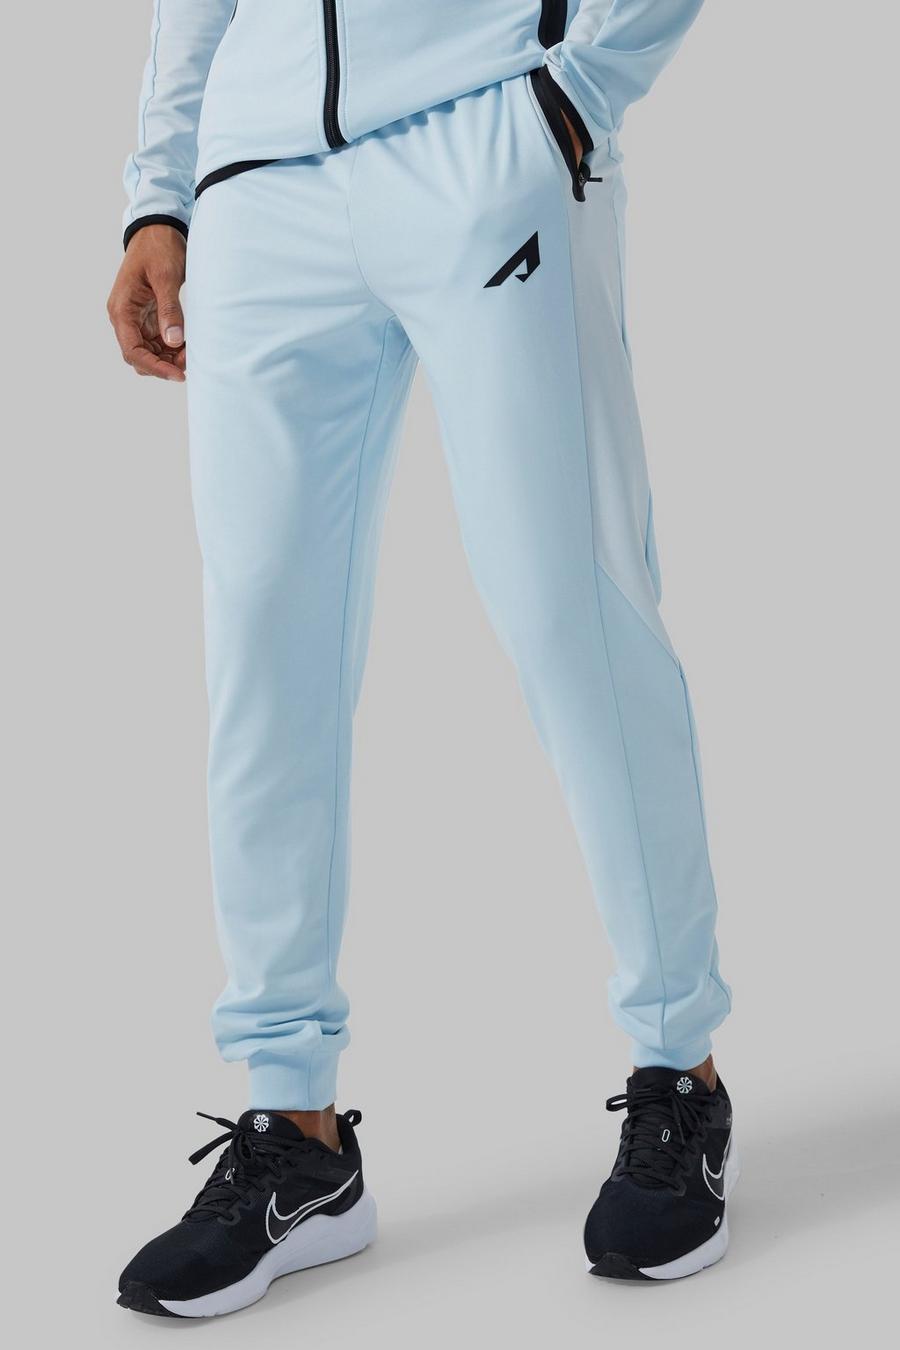 Pantalón deportivo Active con paneles y colores en bloque, Light blue